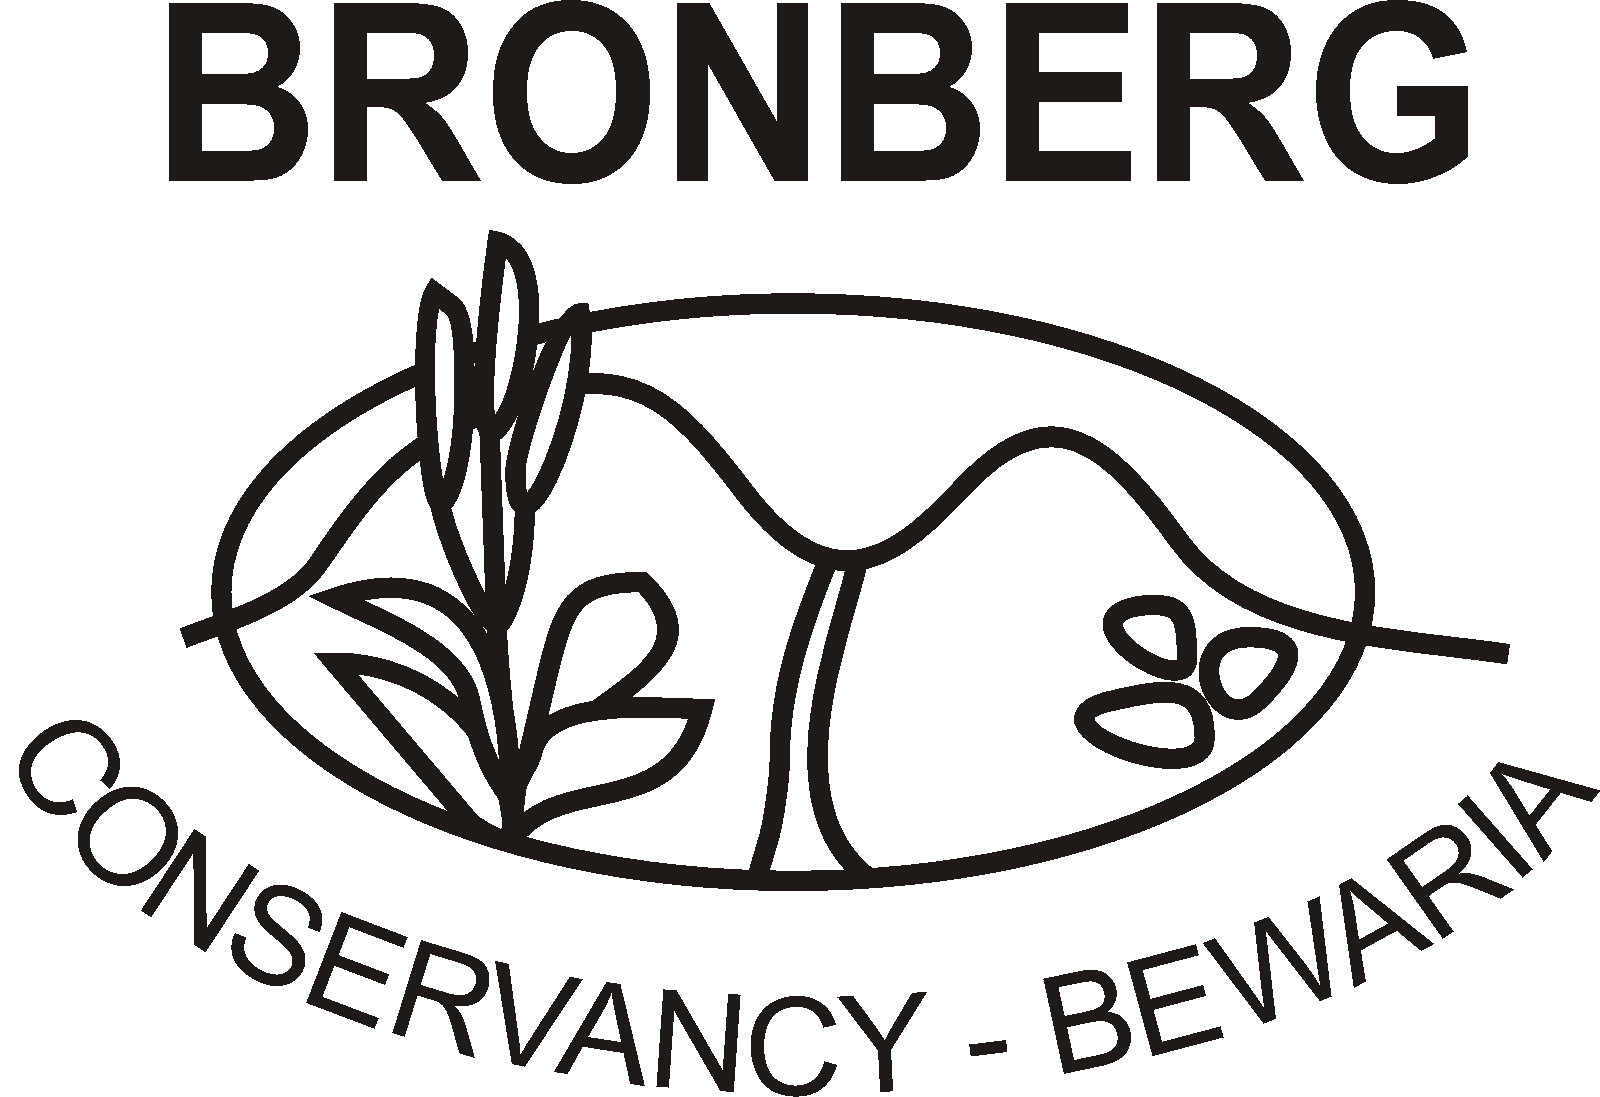 Bronberg Conservancy logo